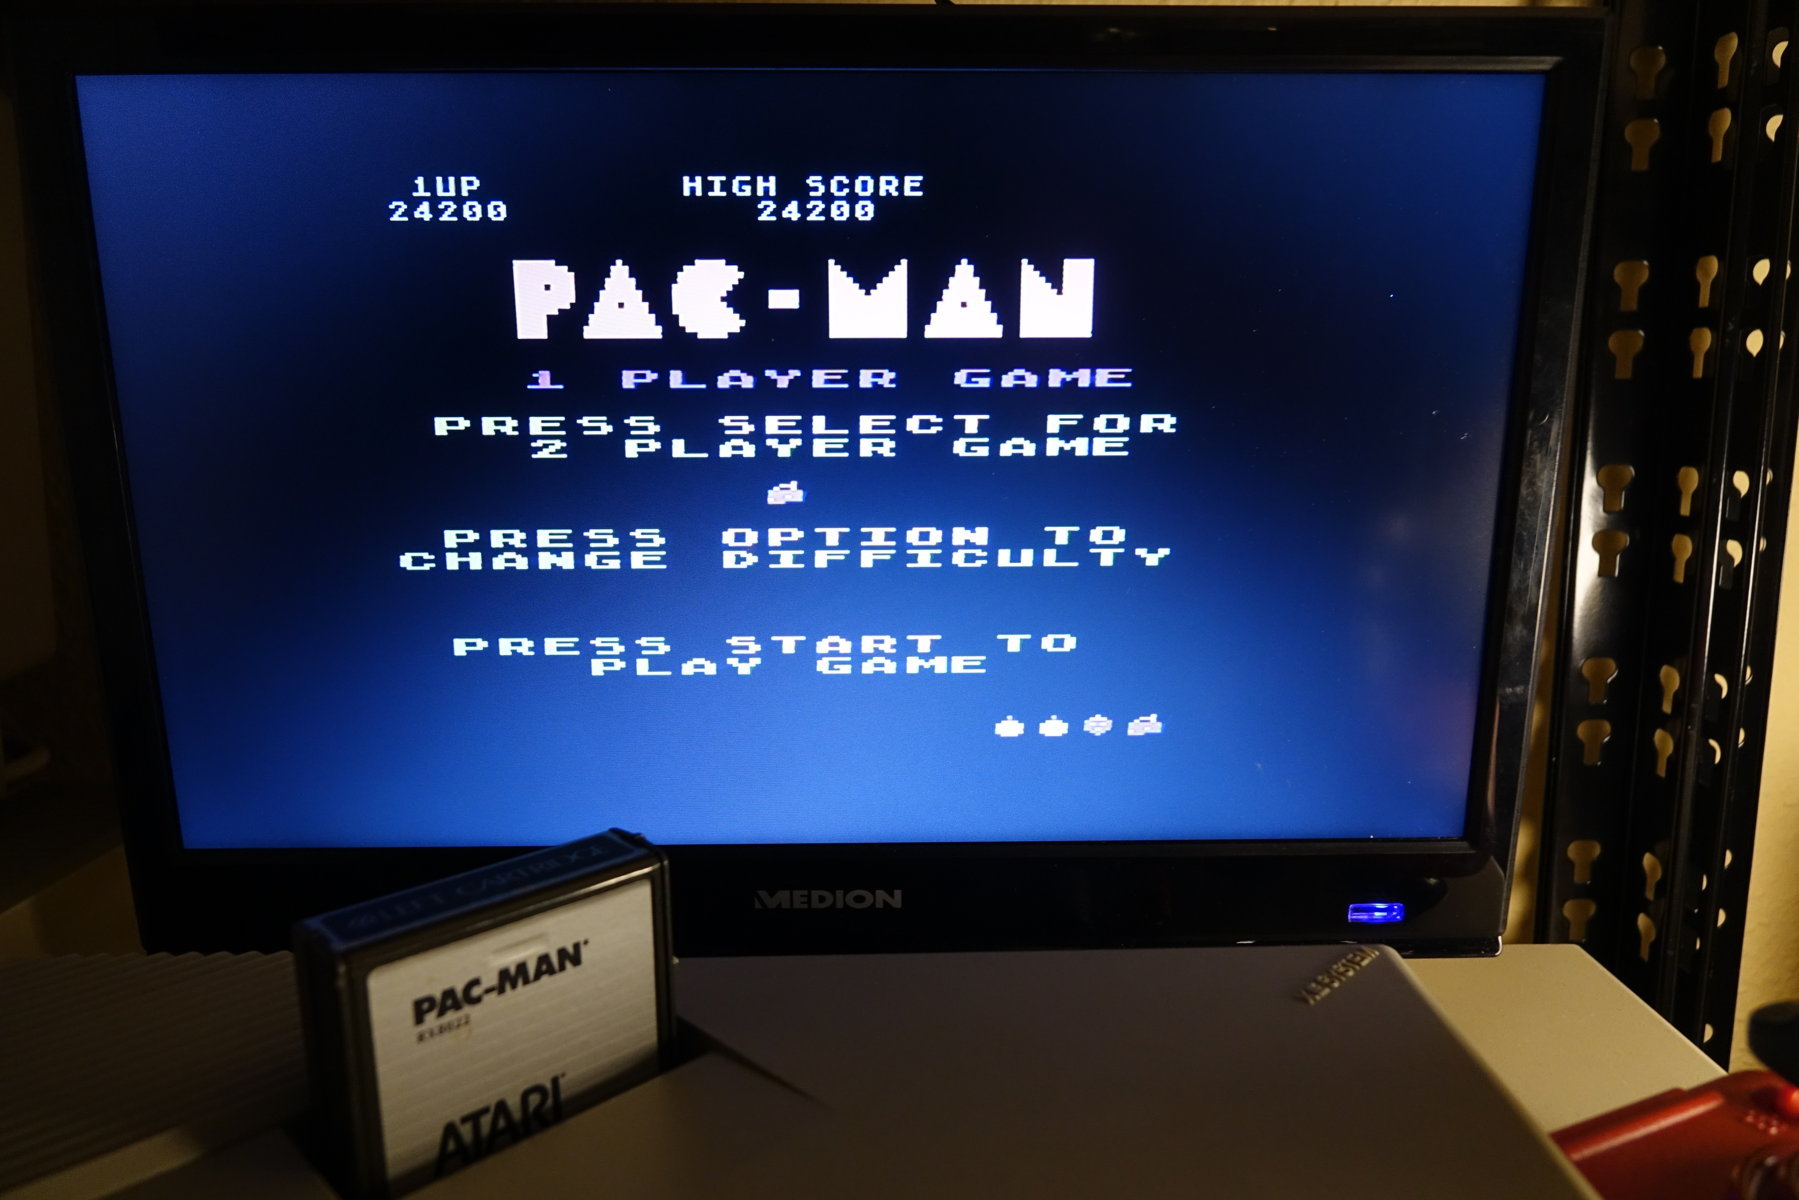 Pac-Man 24,200 points